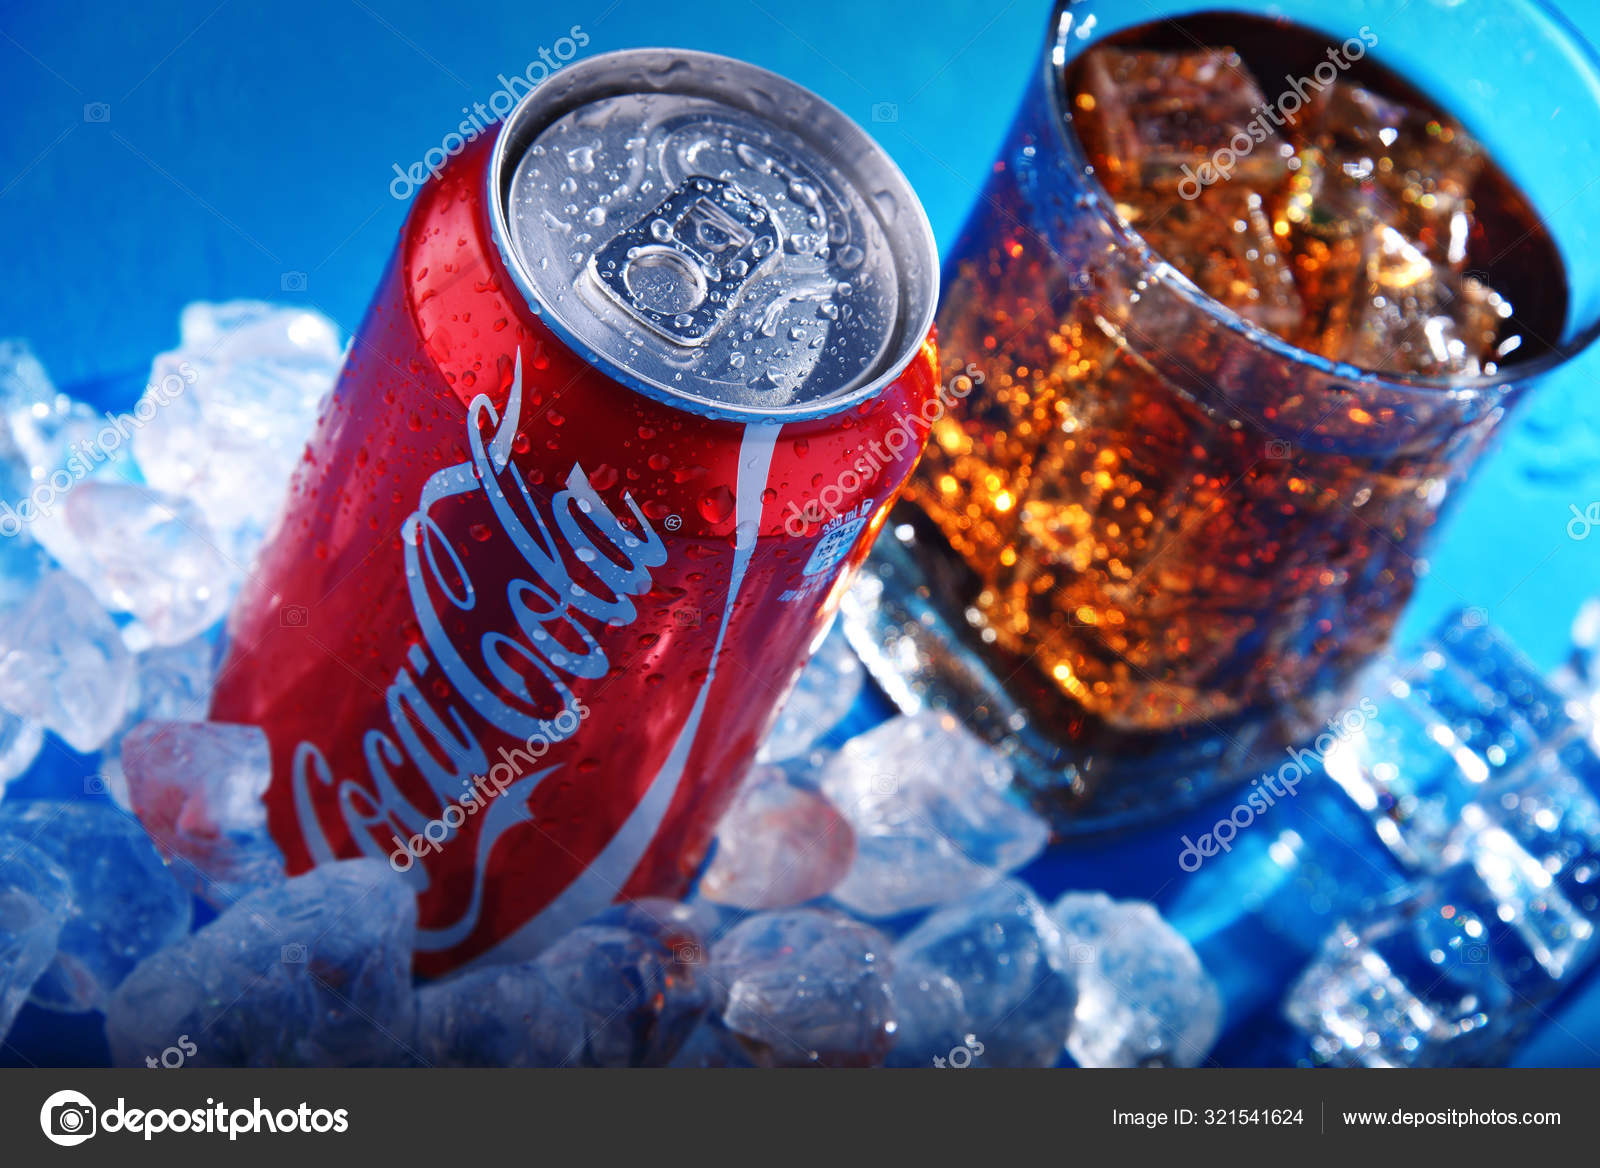 Verre Coca Cola - Canette de Soda